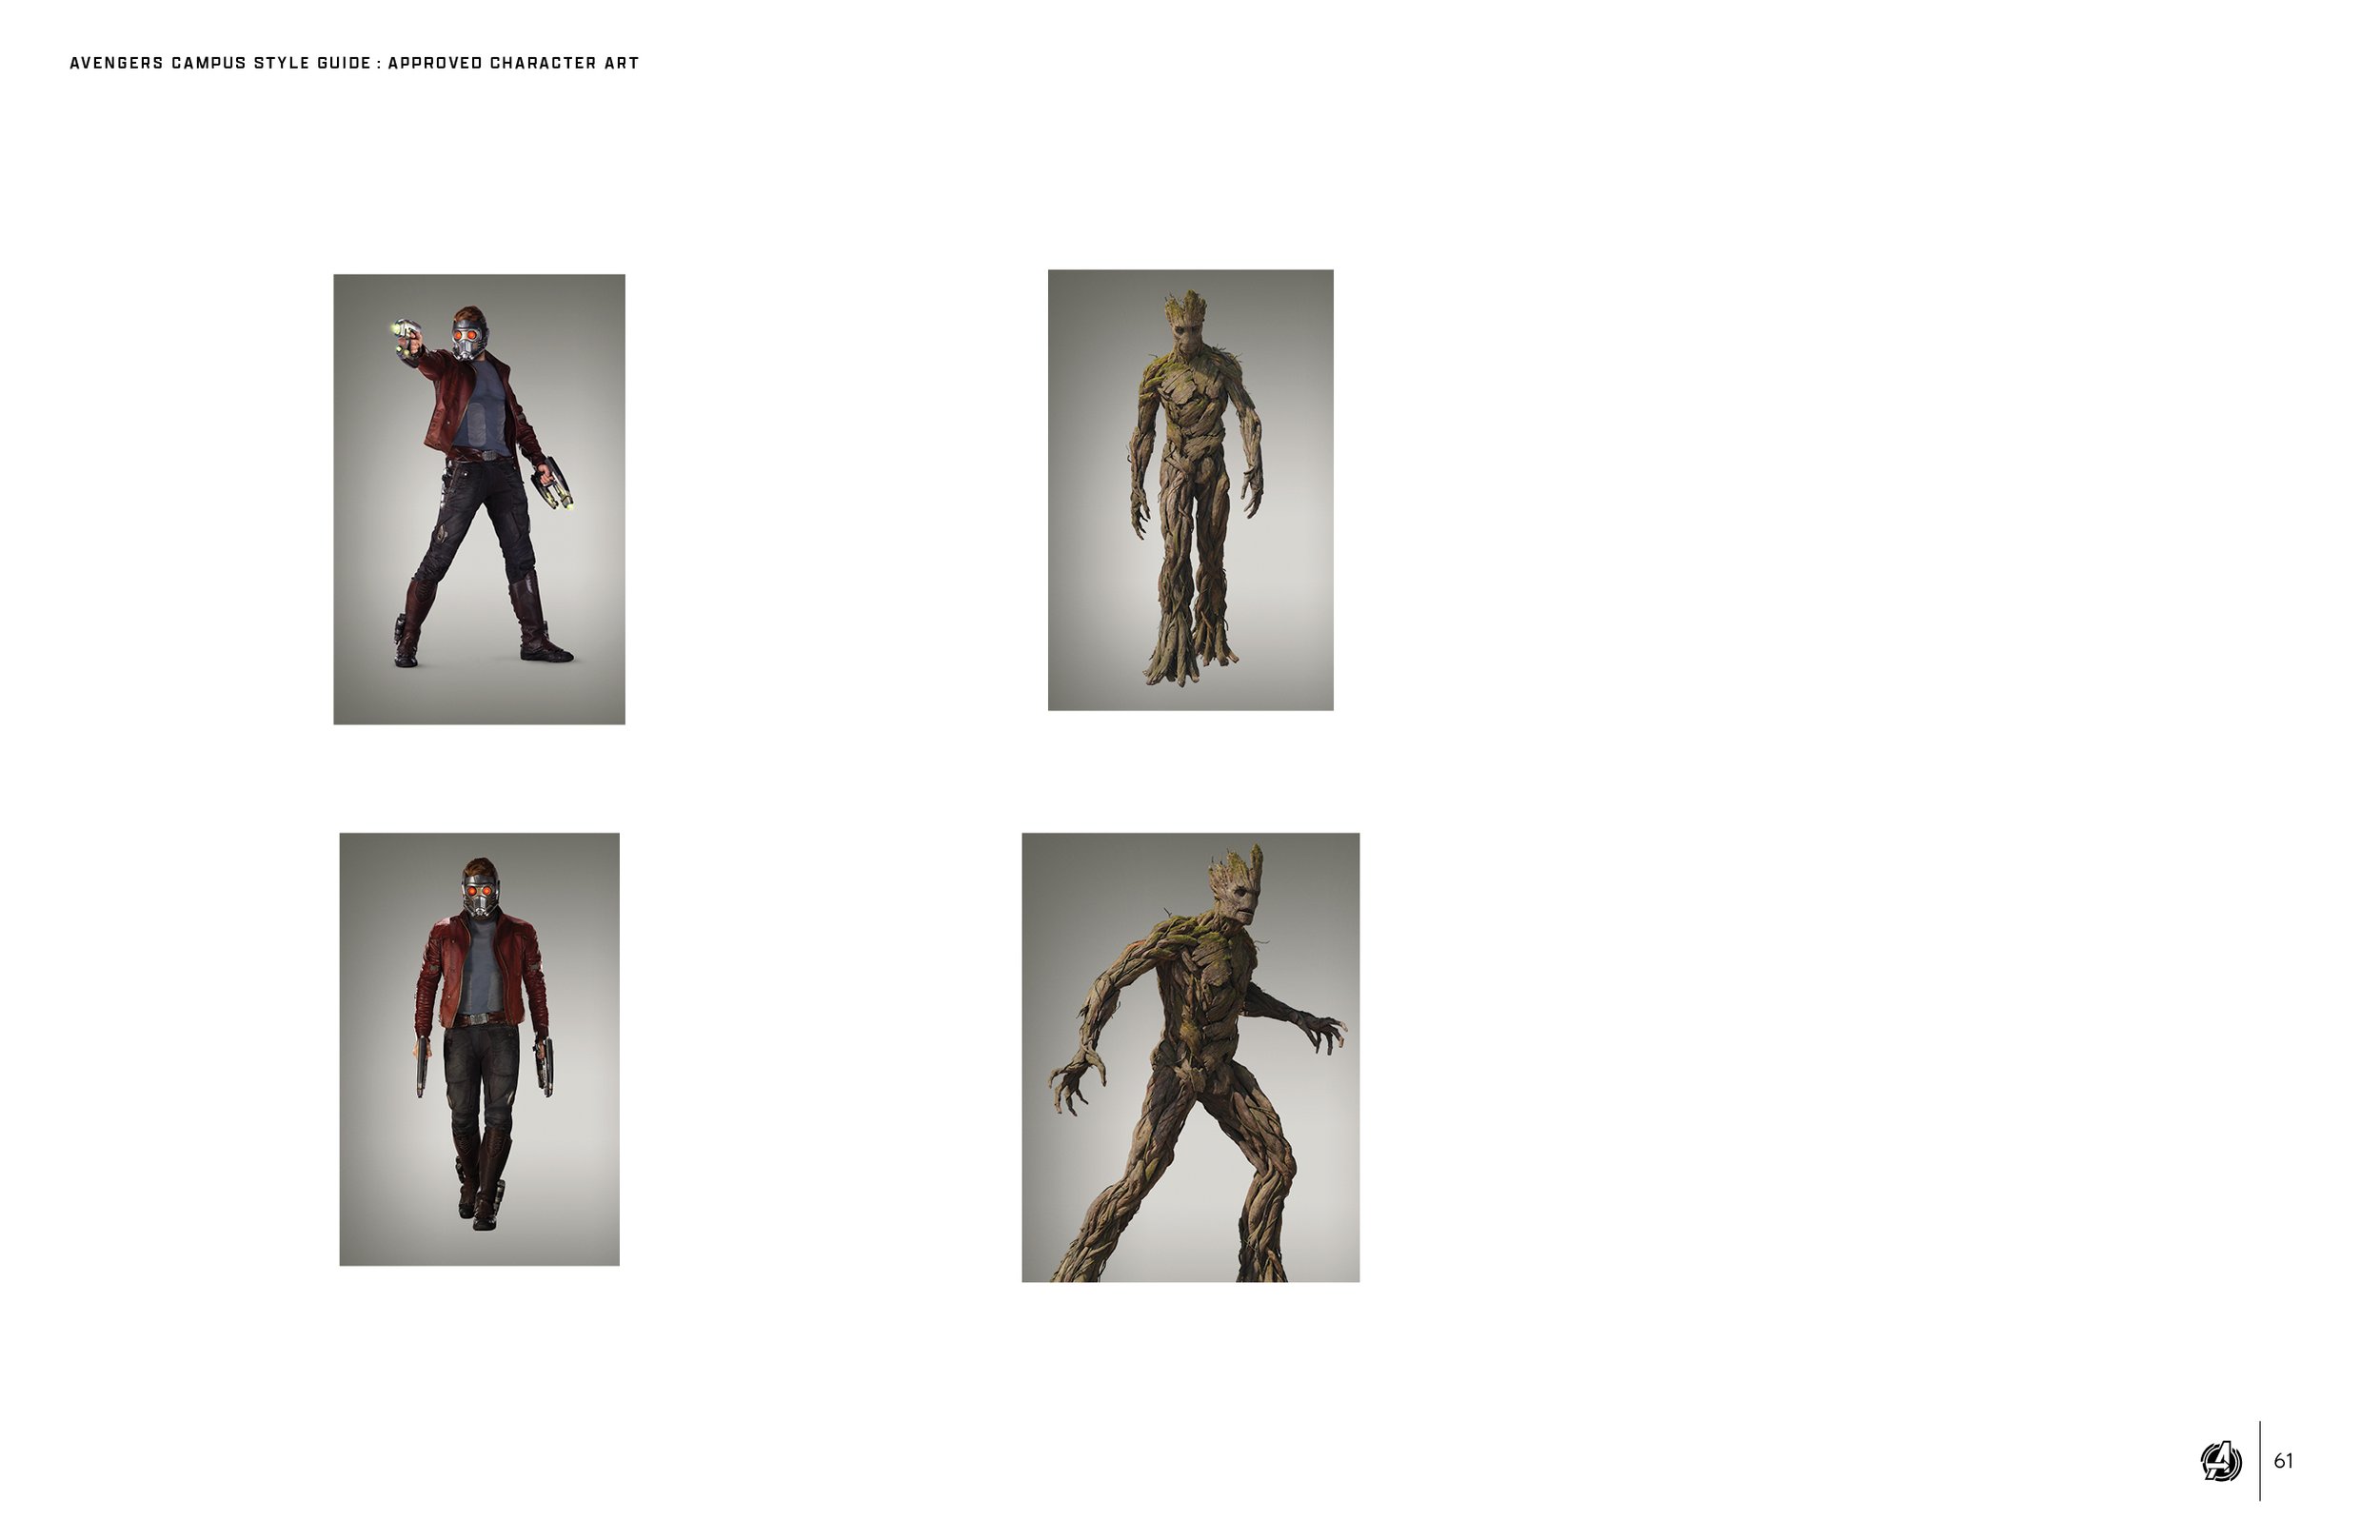 AvengersCampus_StyleGuide_Website_61.jpg